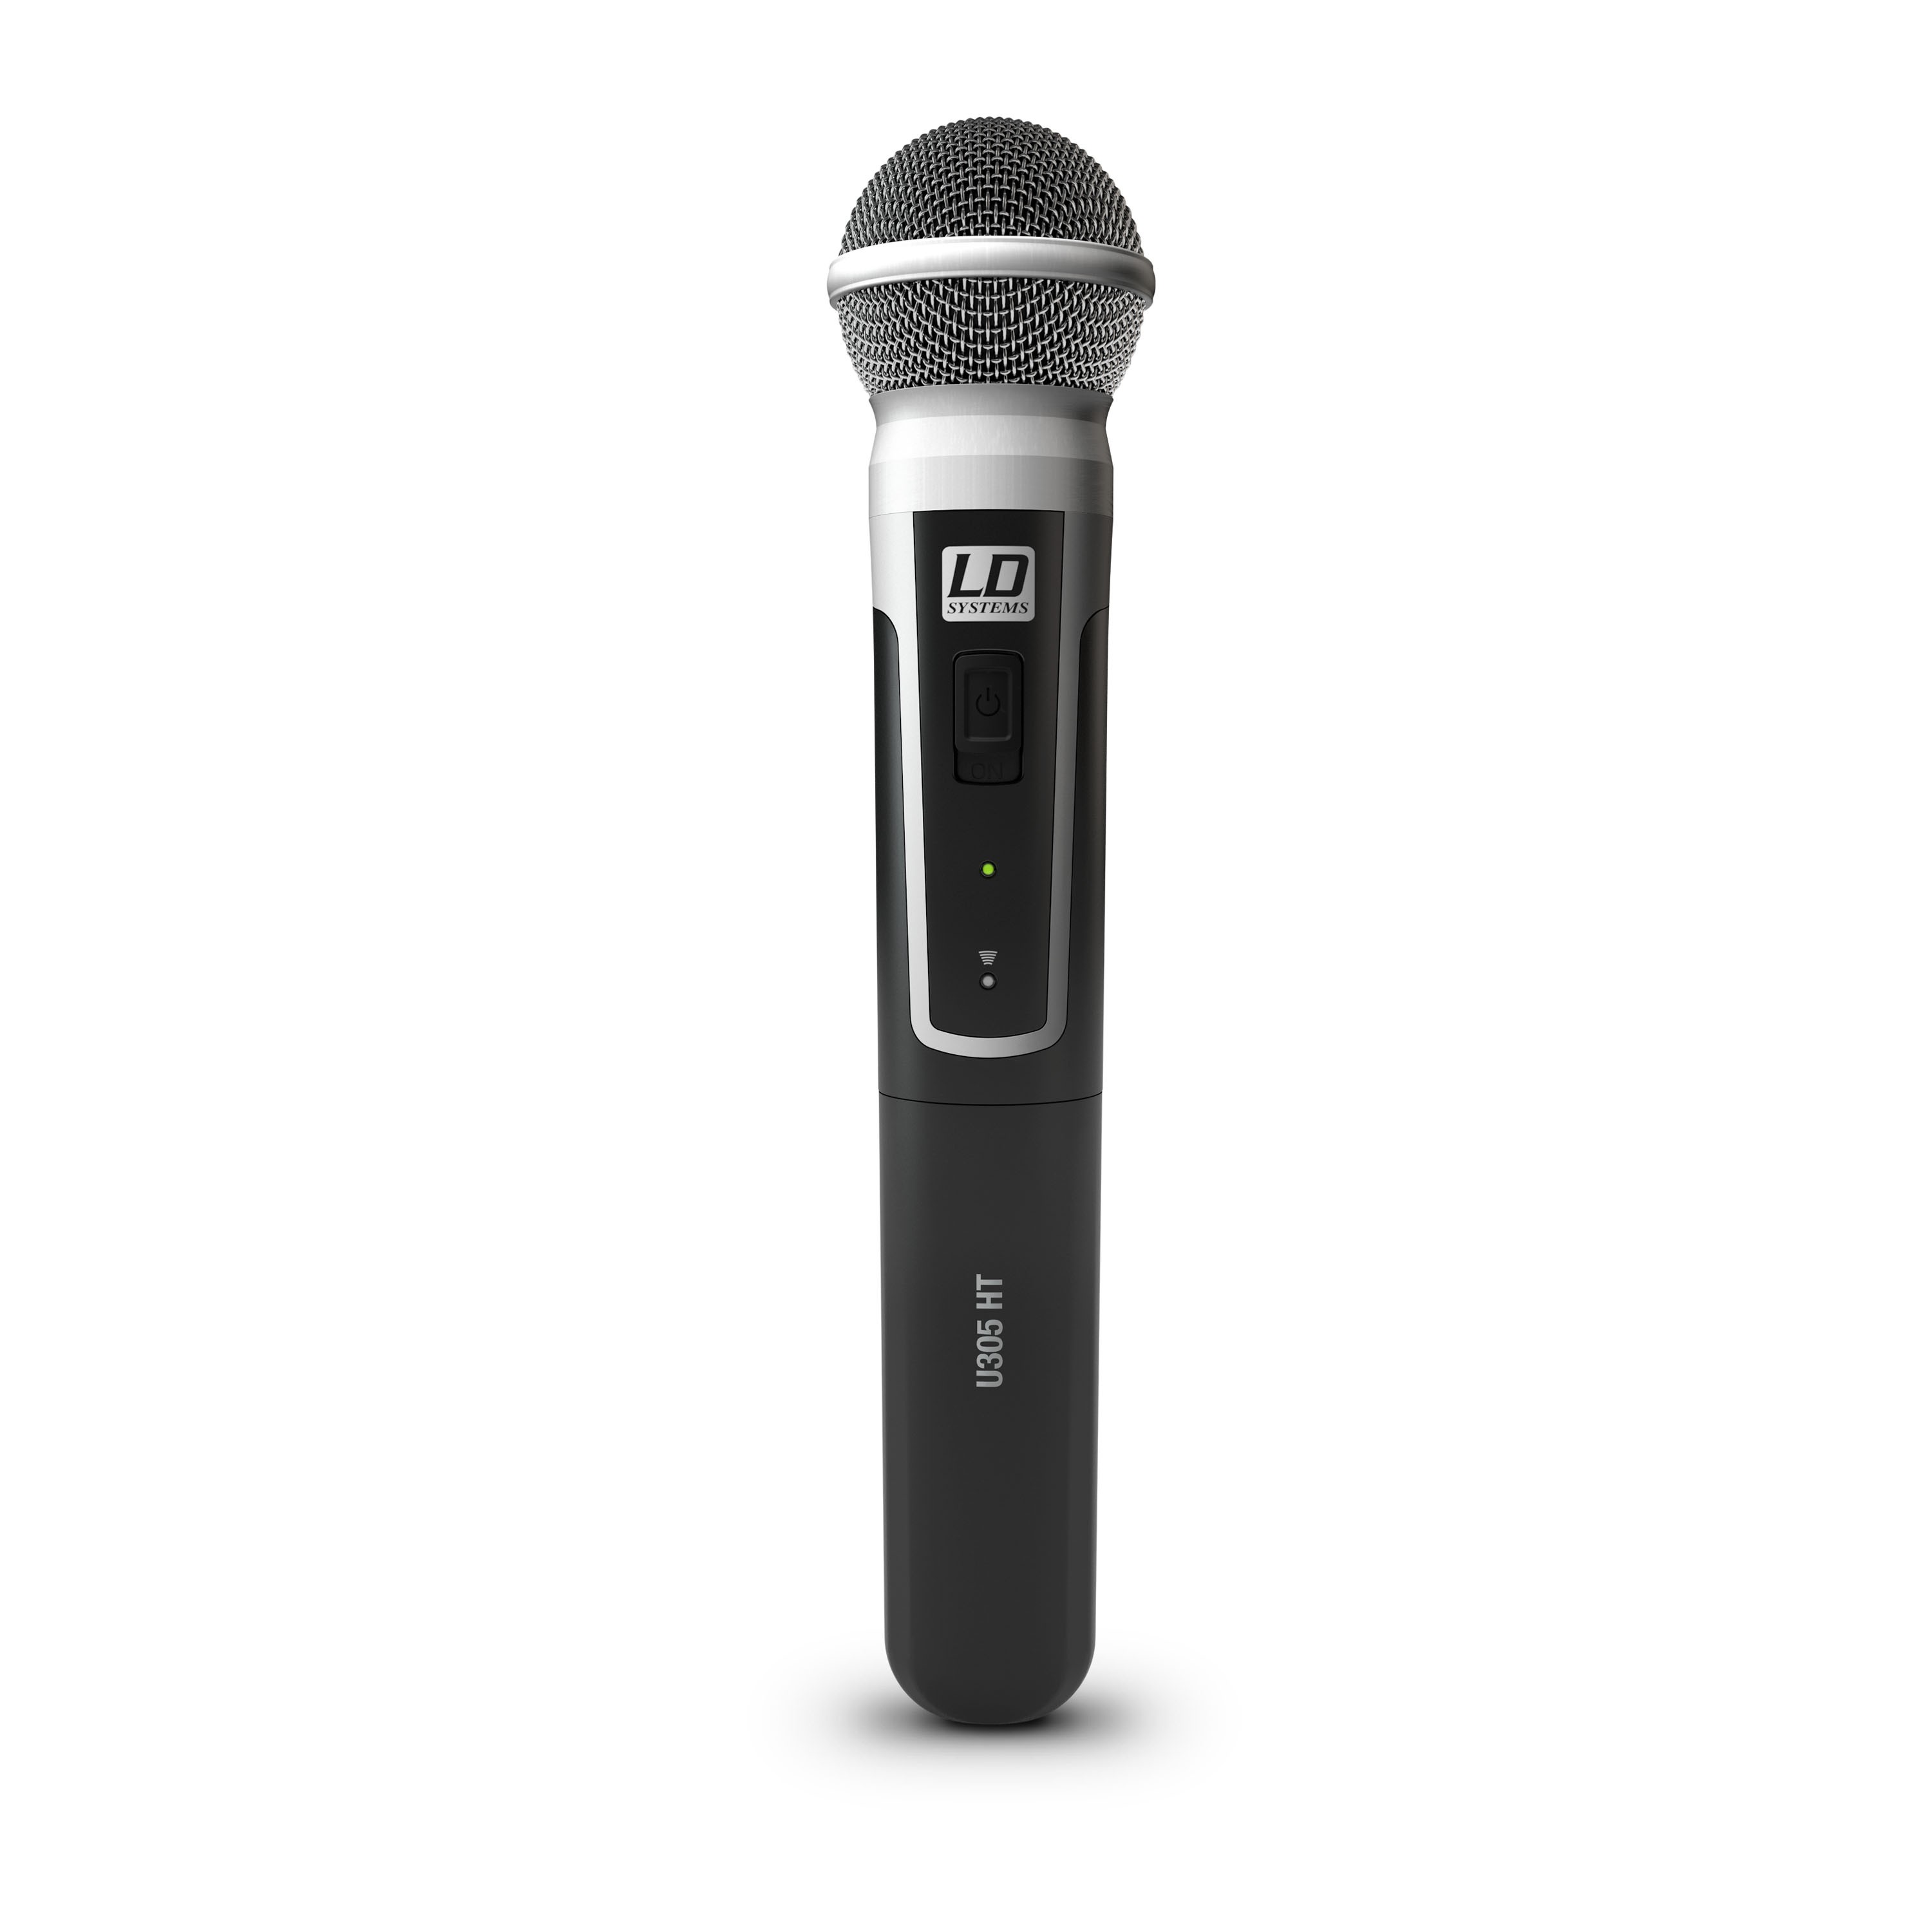 Ld Systems U305 Hhd - Wireless handheld microphone - Variation 2